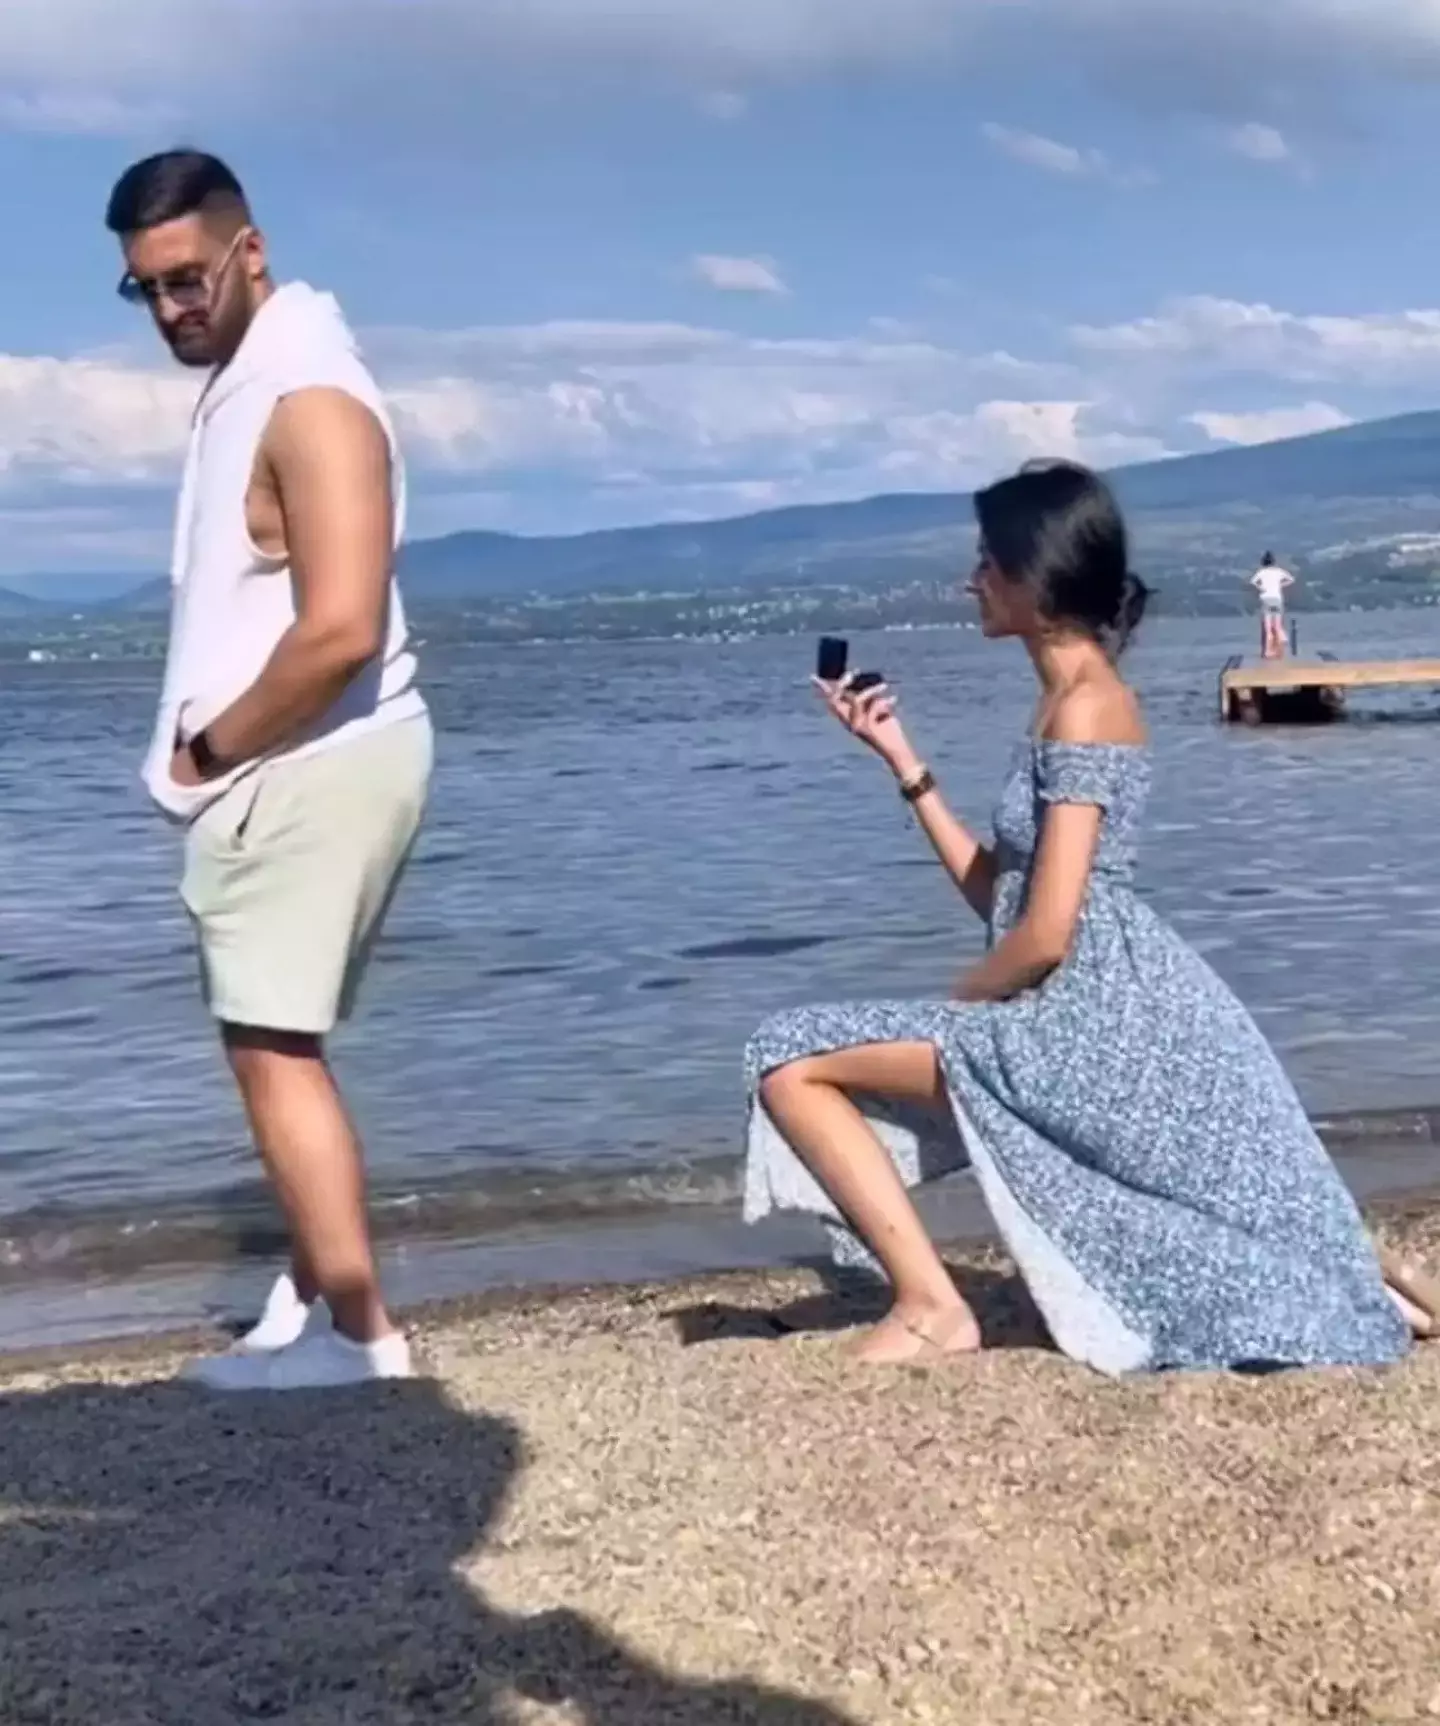 Sukhmin's proposal video went viral.